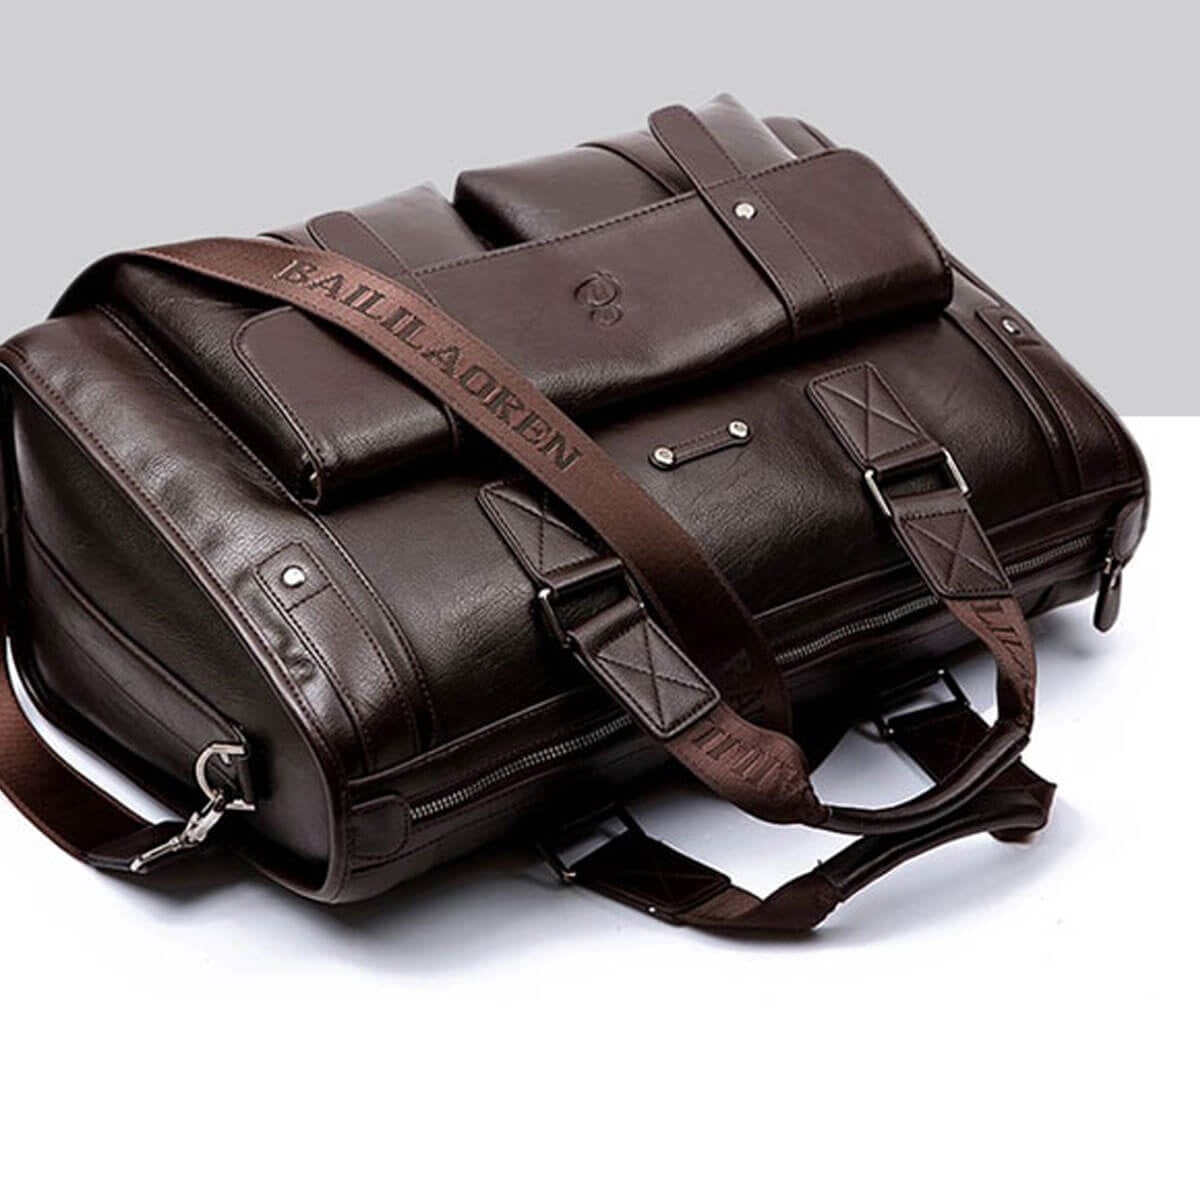 Waterproof Leather Shoulder Bag Business Travel Premium Briefcase